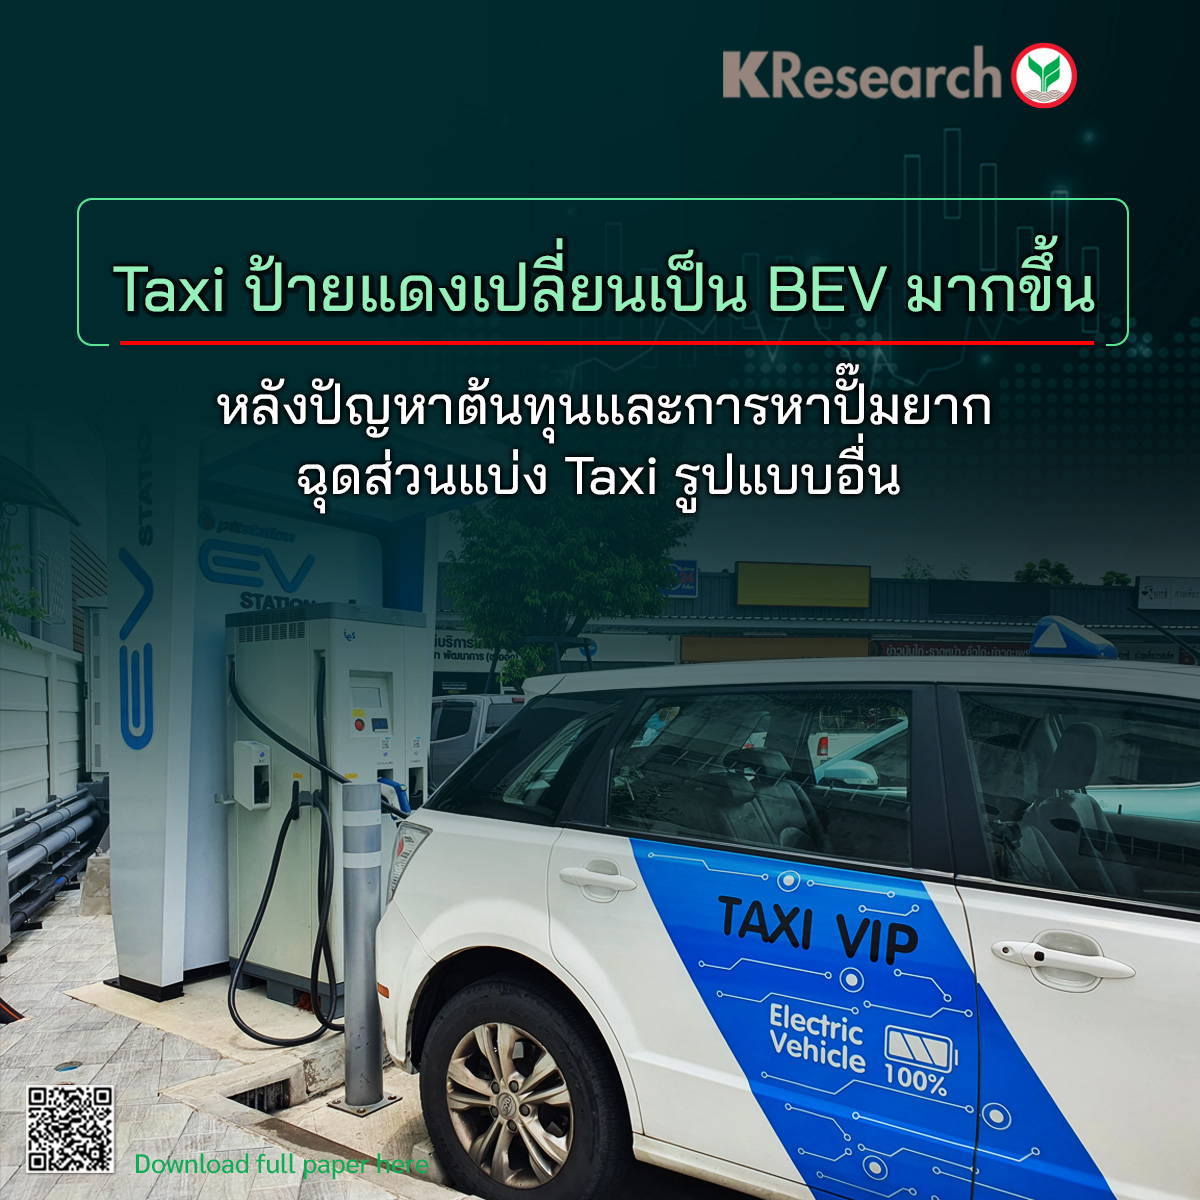 Taxi ป้ายแดงเปลี่ยนเป็น BEV มากขึ้น หลังปัญหาต้นทุนและการหาปั๊มยาก